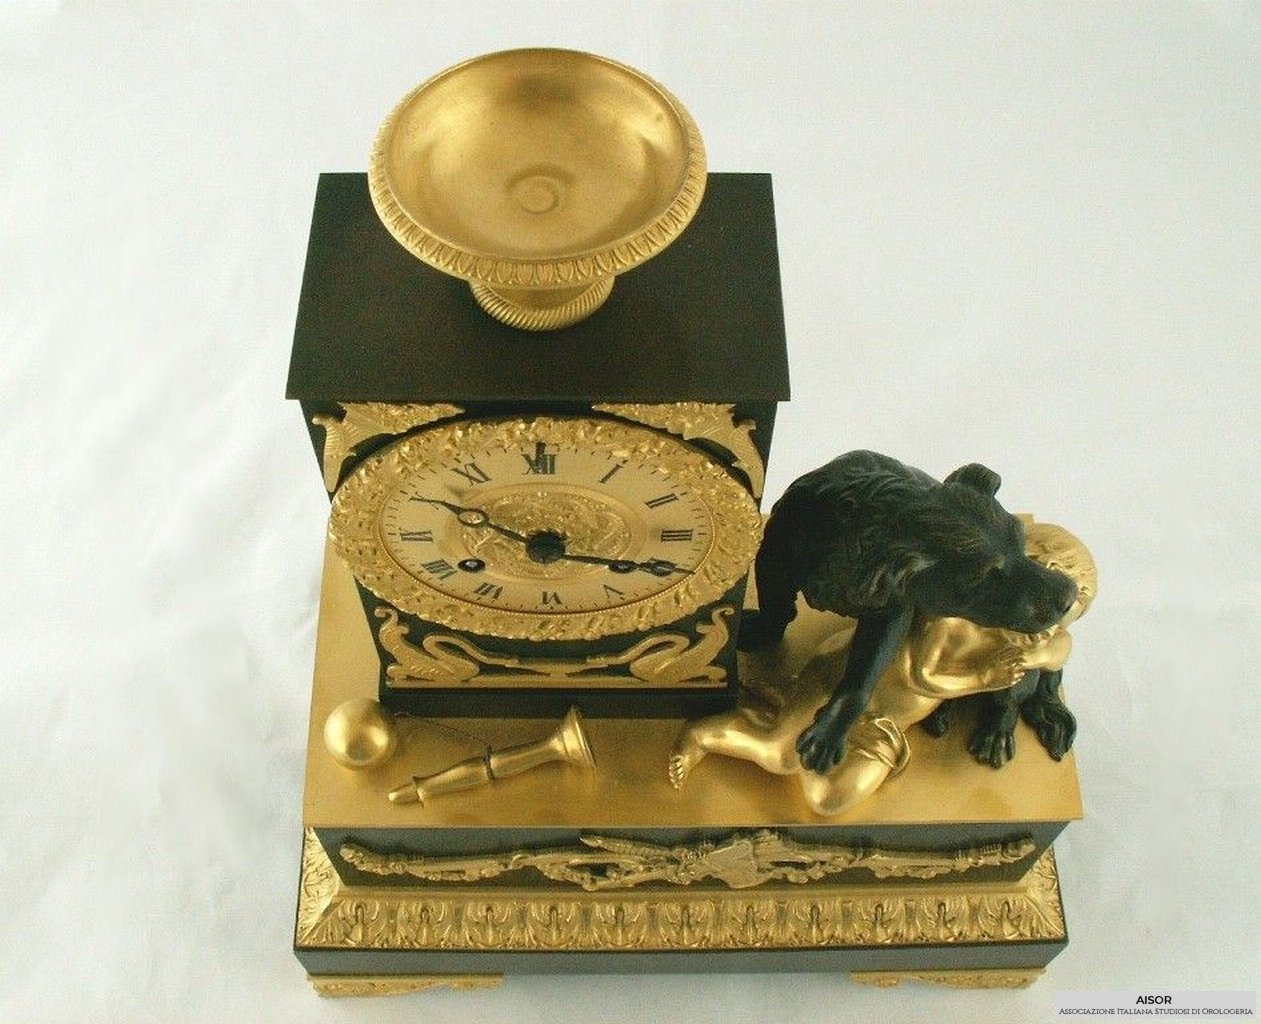 AISOR - Parigina bronzo dorato orologio - 09.JPG